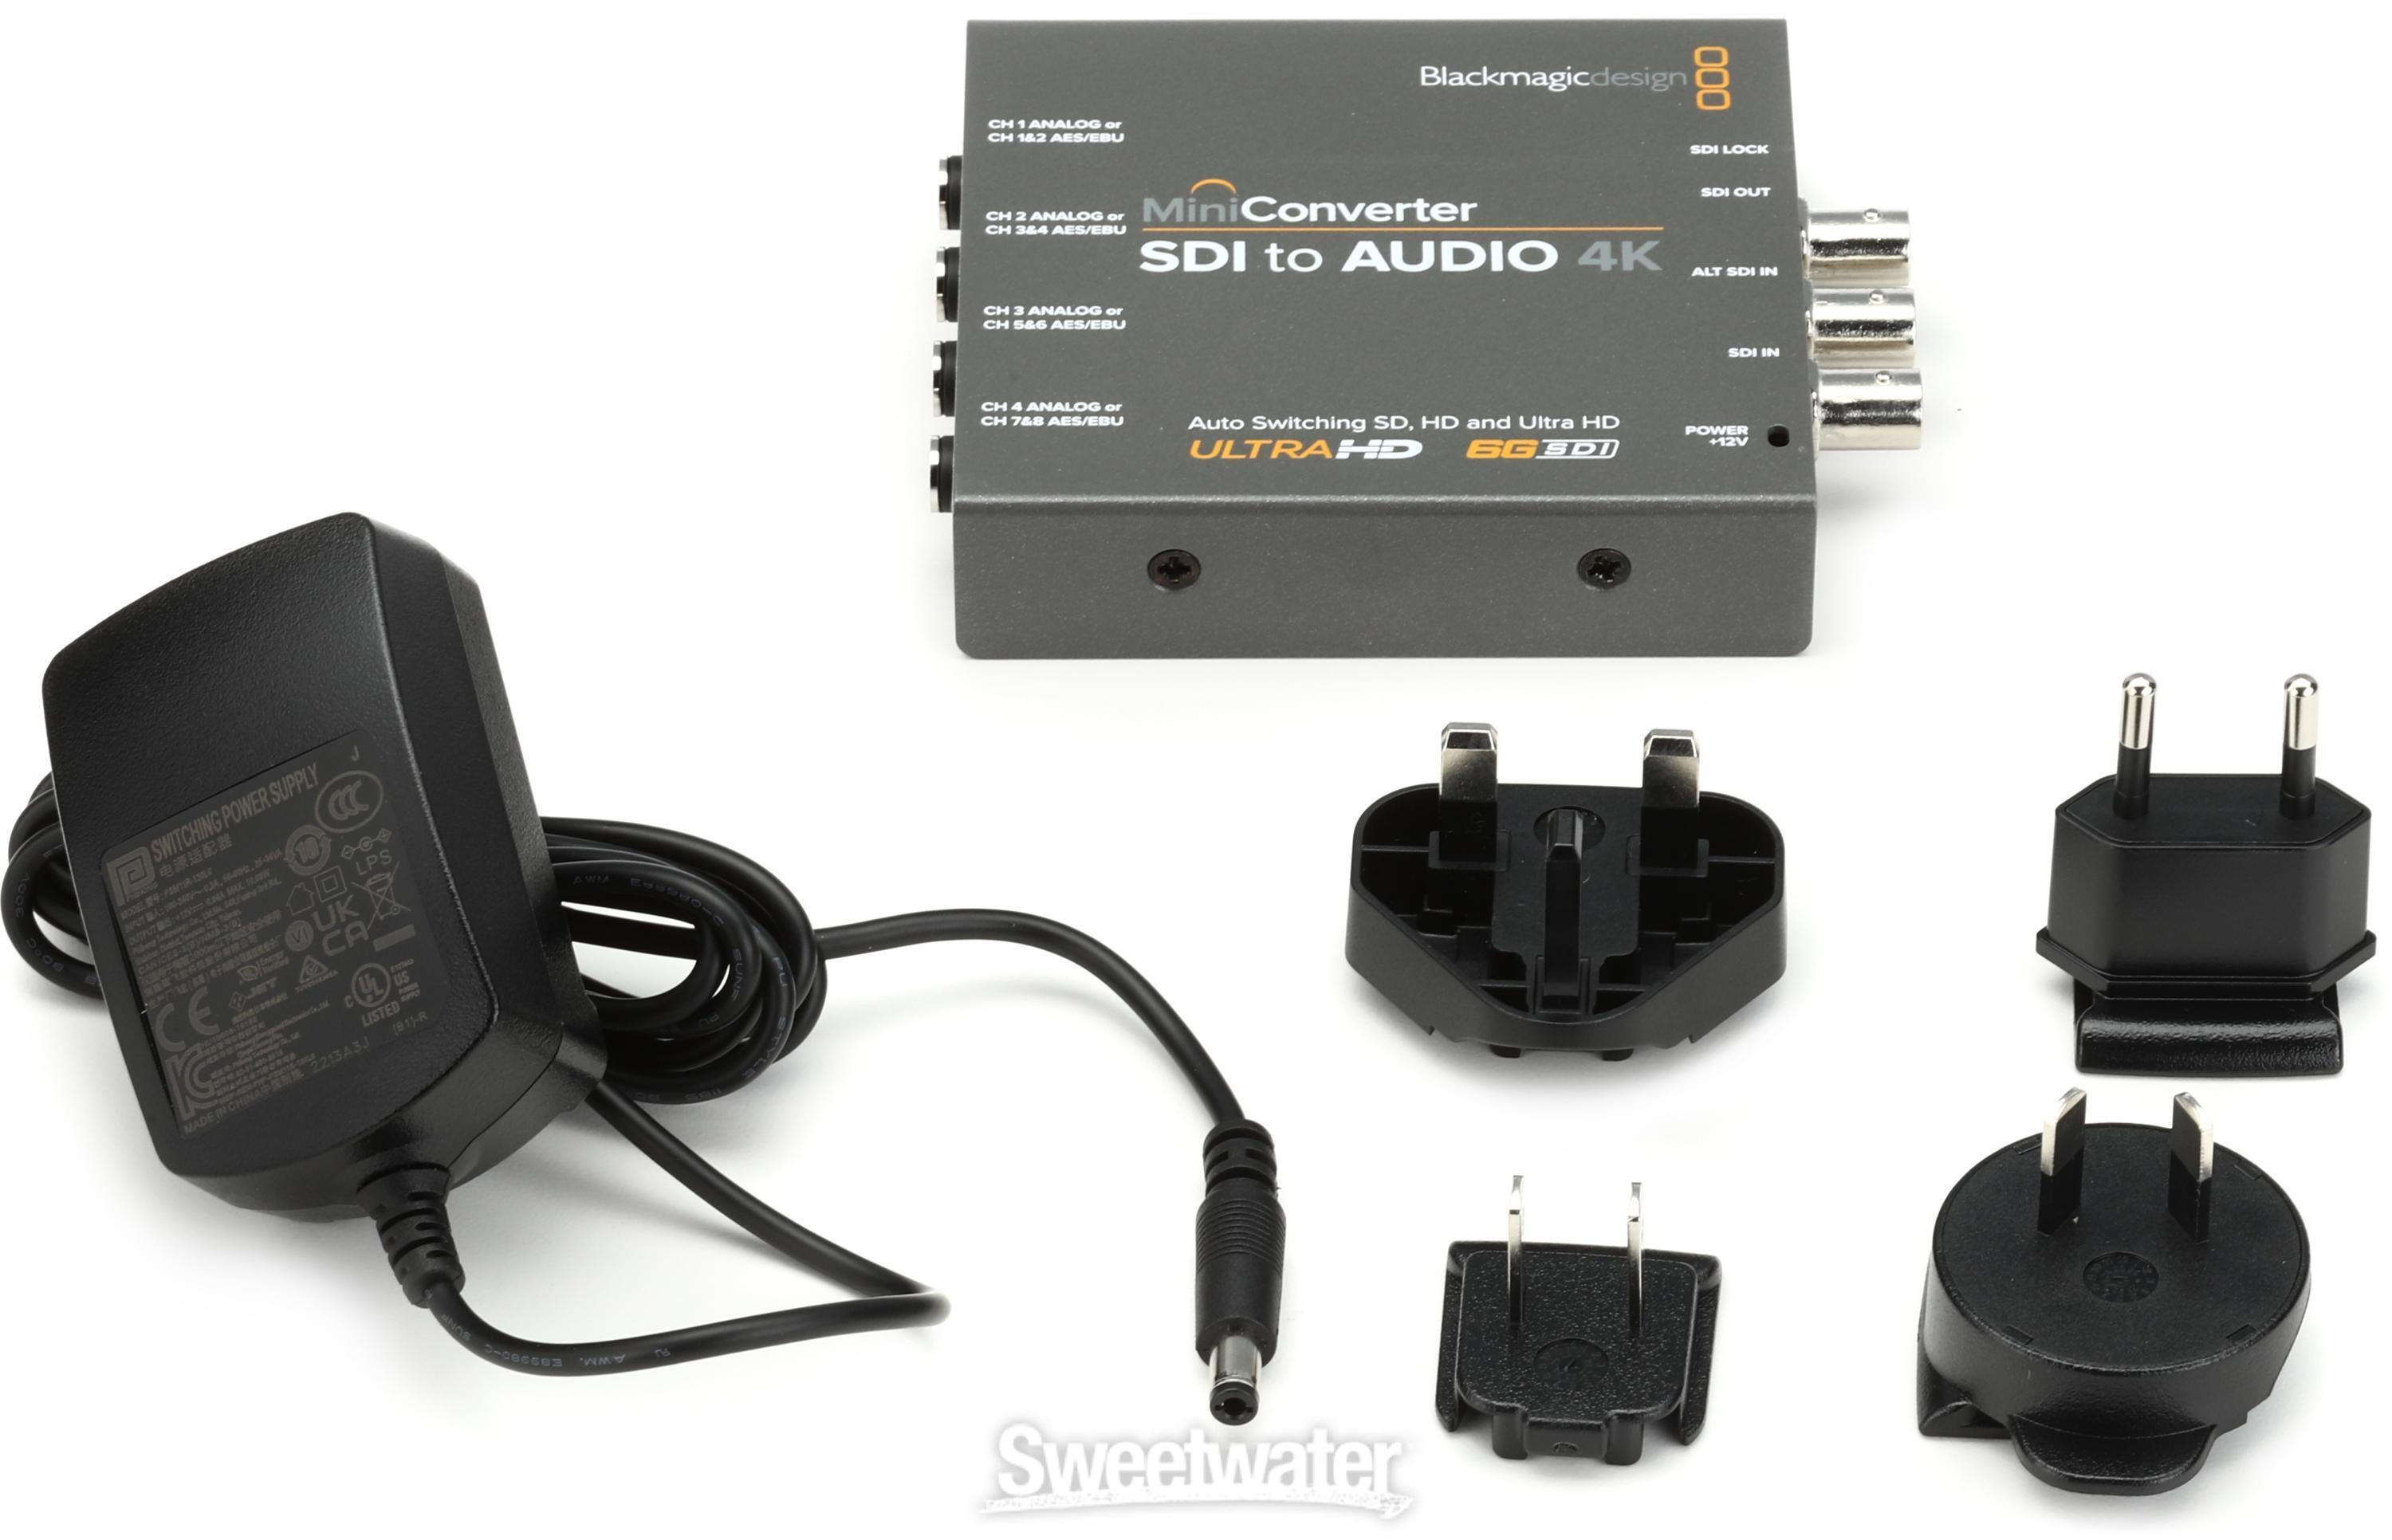 Blackmagic Design Mini Converter - SDI to Audio 4K | Sweetwater